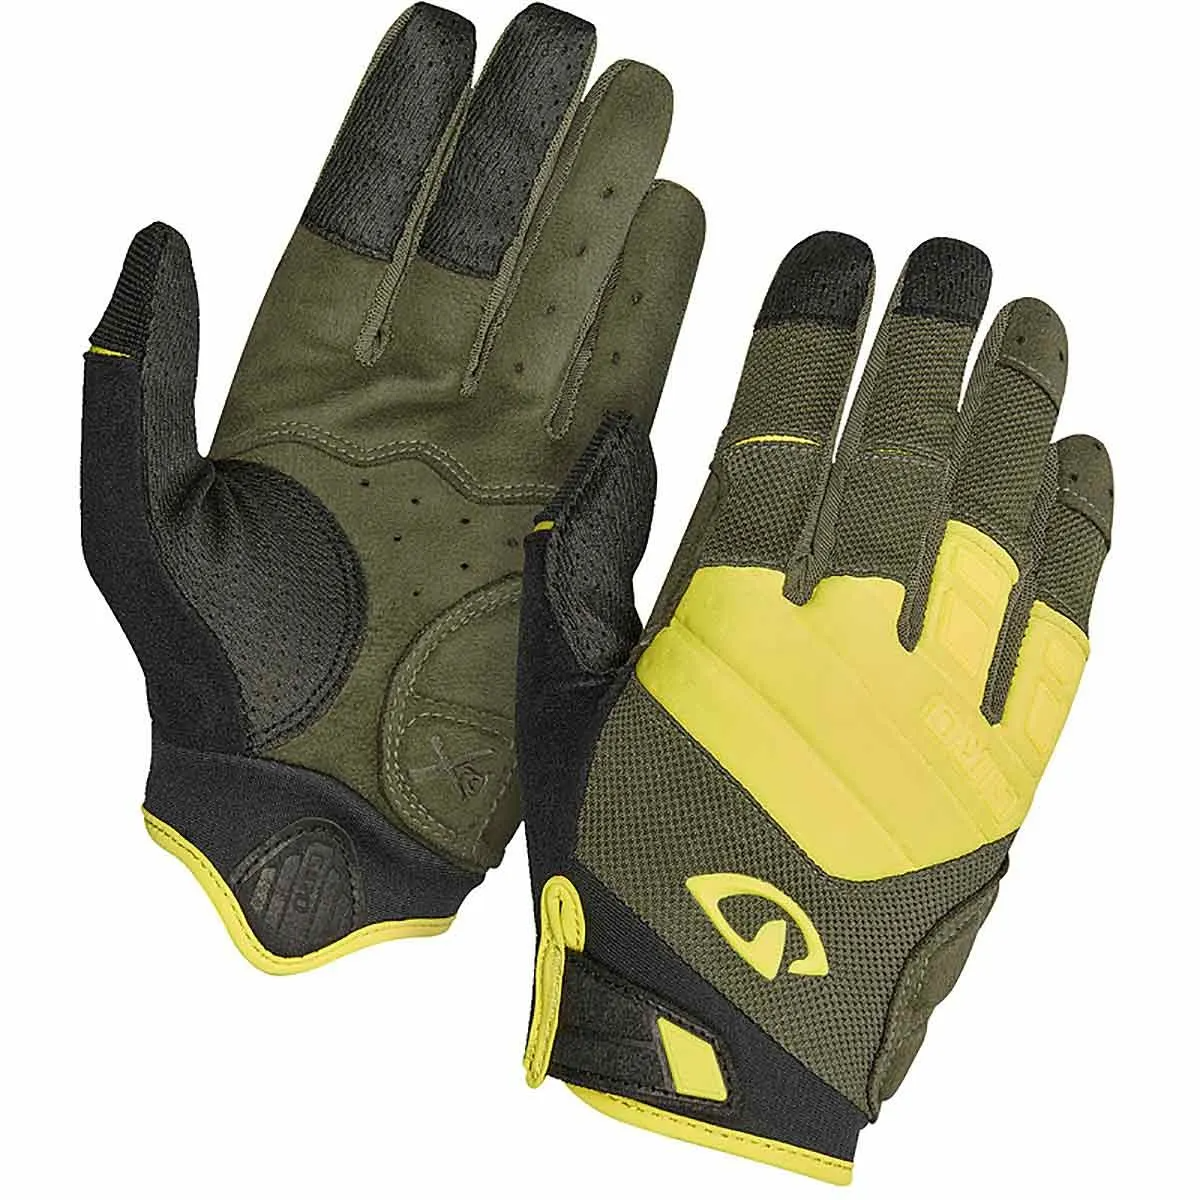 Green bike gloves